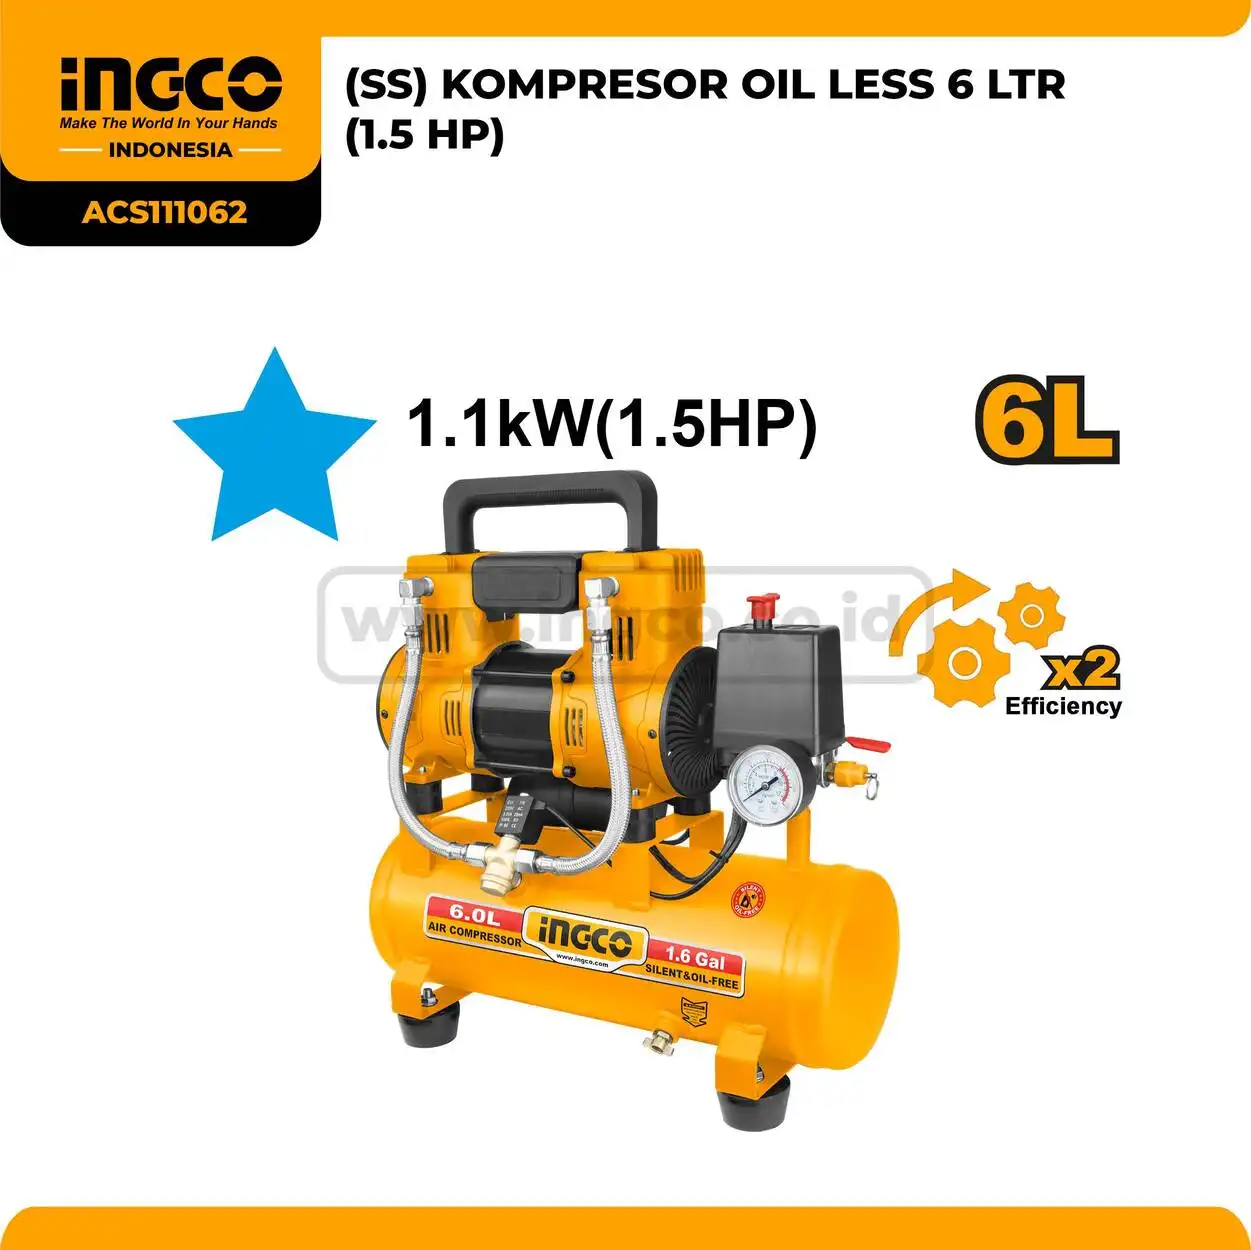 ACS111062 - (SS) KOMPRESOR OIL LESS 6 LTR (1.5 HP)